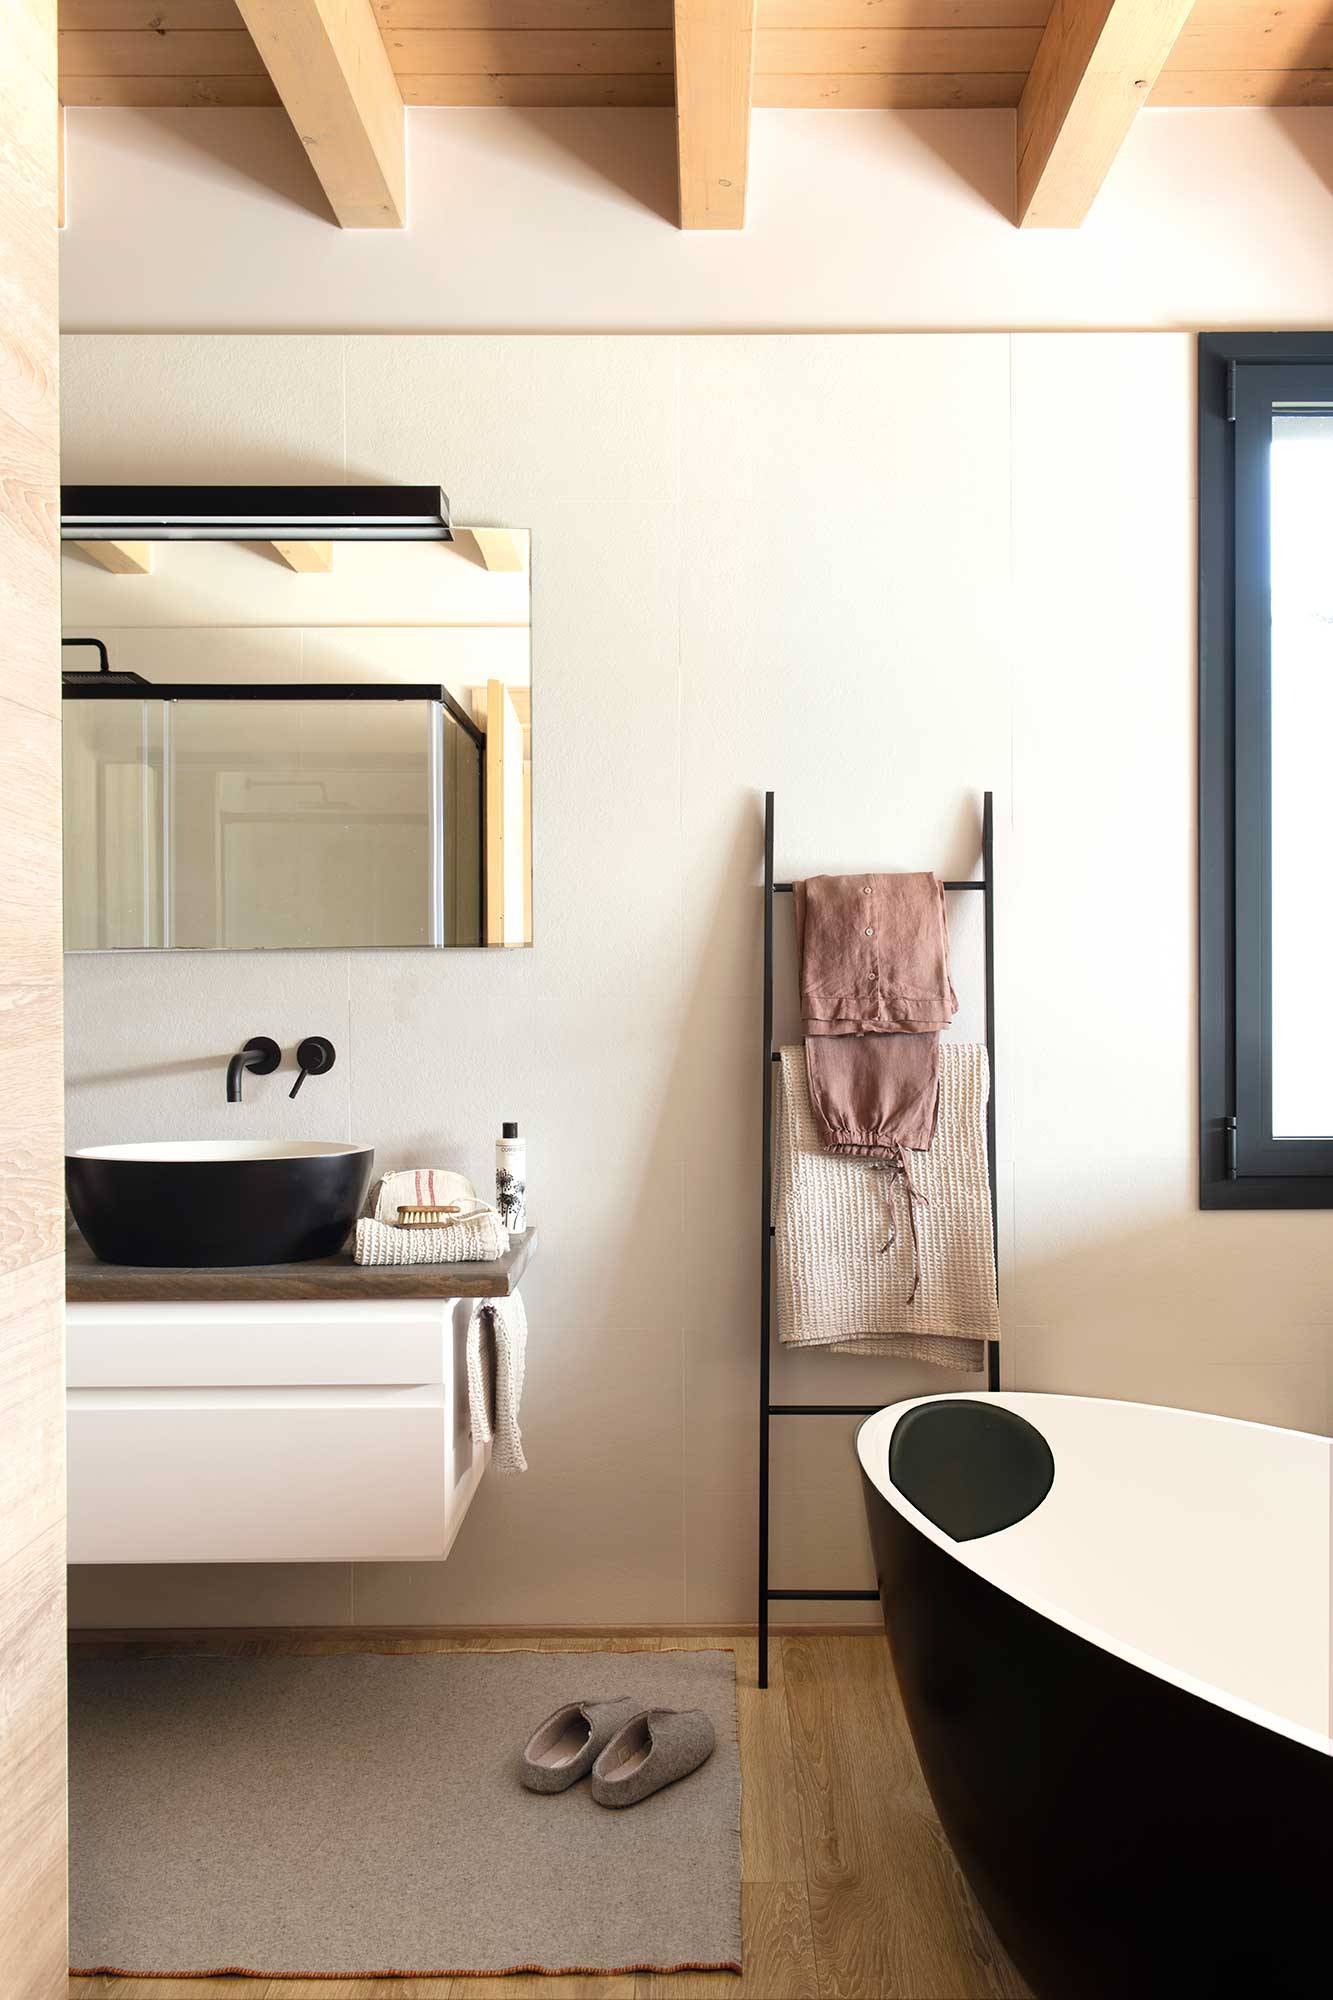 Baño rústico moderno con vigas de madera y bañera exenta negra. 